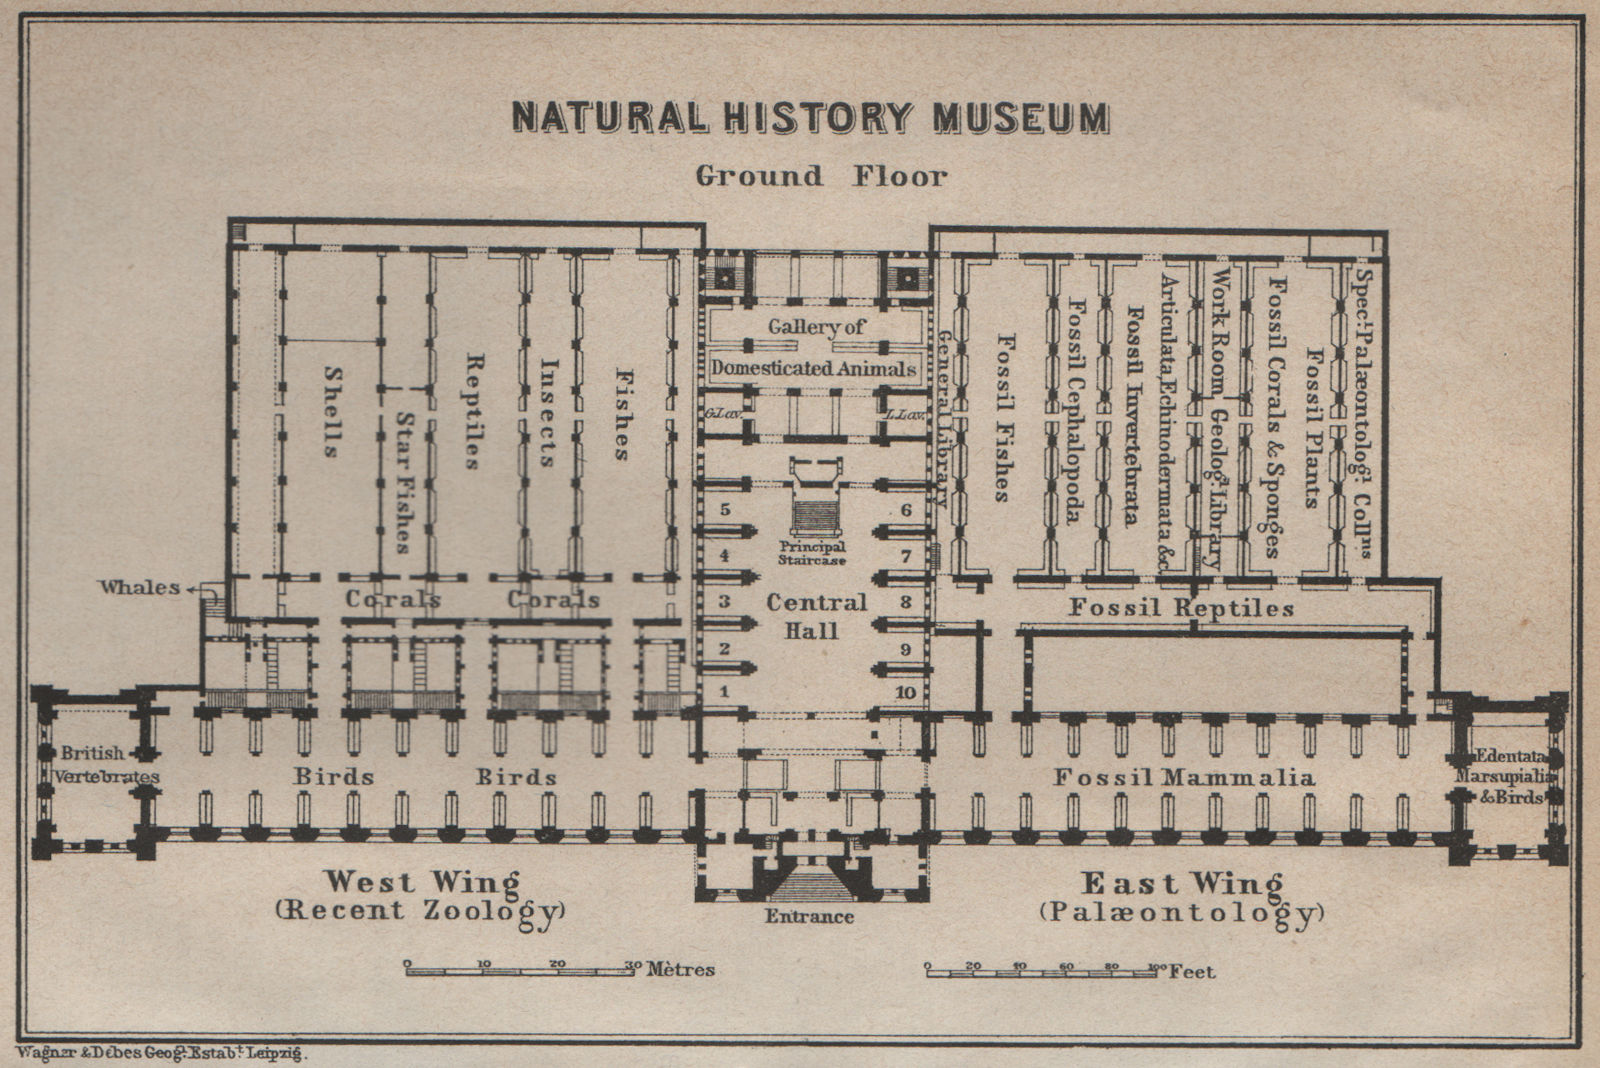 NATURAL HISTORY MUSEUM ground floor plan. South Kensington, London 1930 map